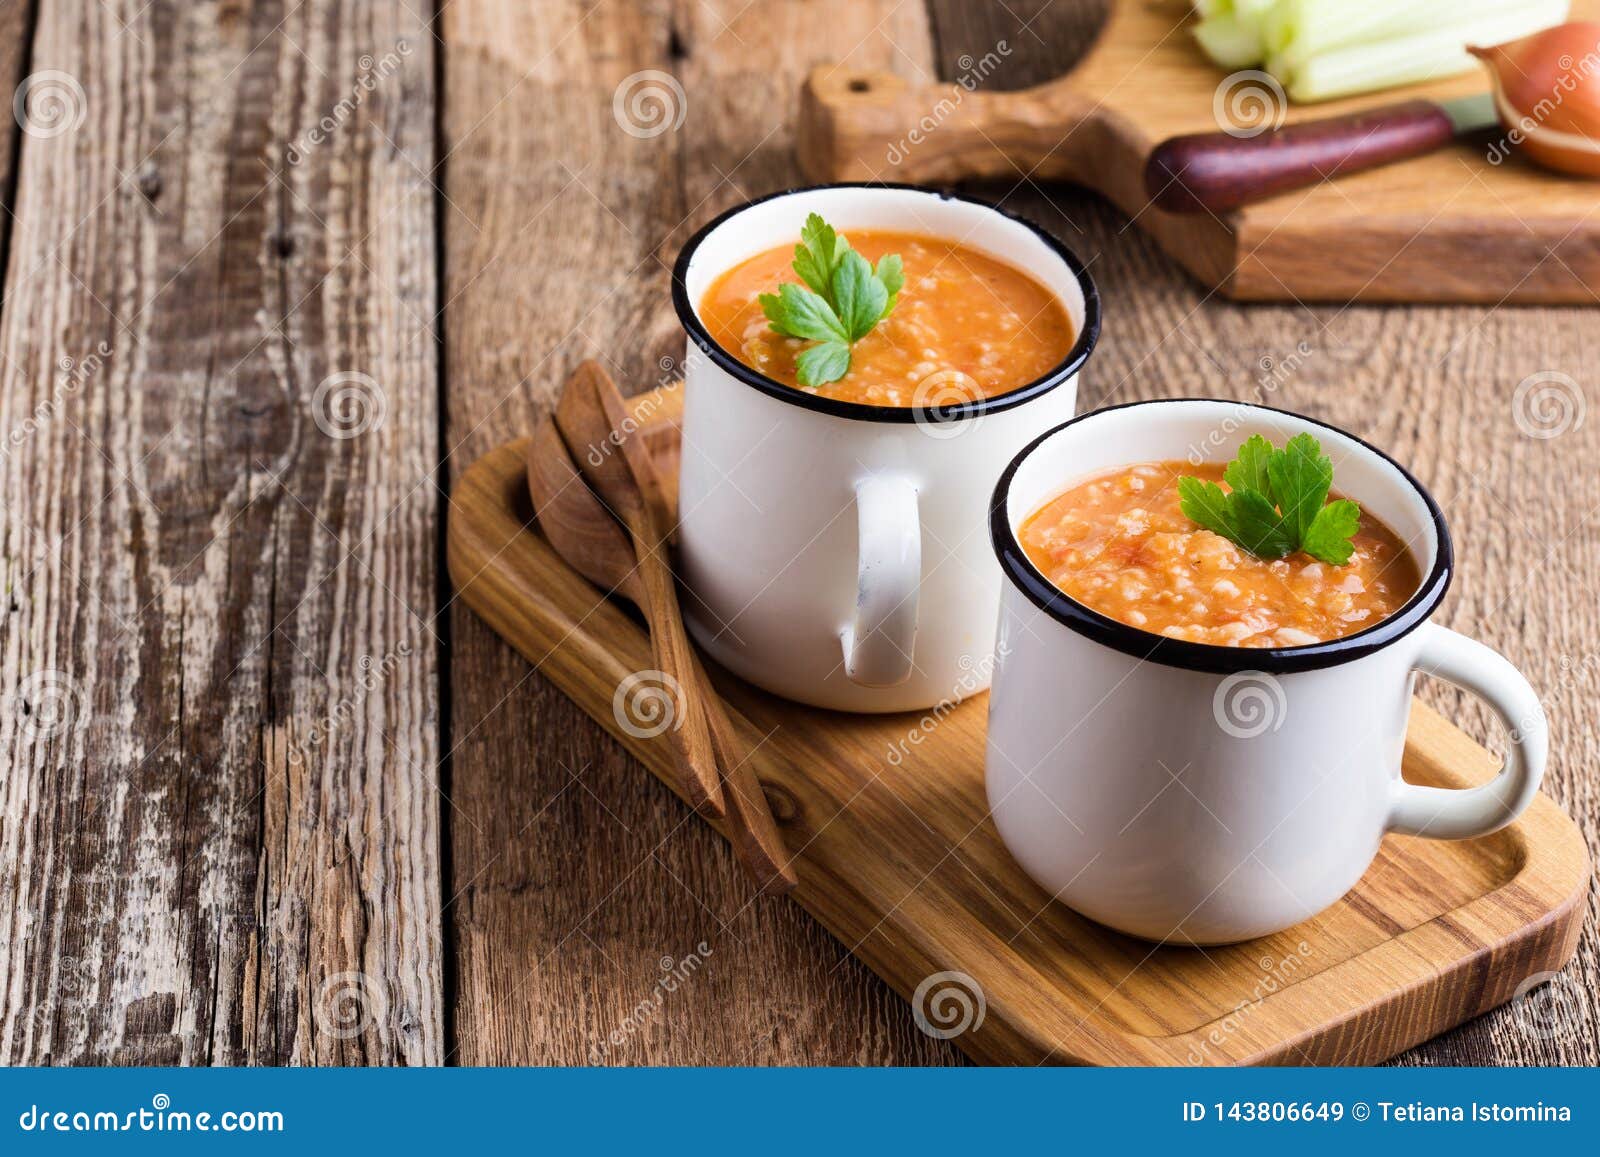 Vegan Pearl Barley Soup with Seasonal Vegetables Stock Image - Image of ...